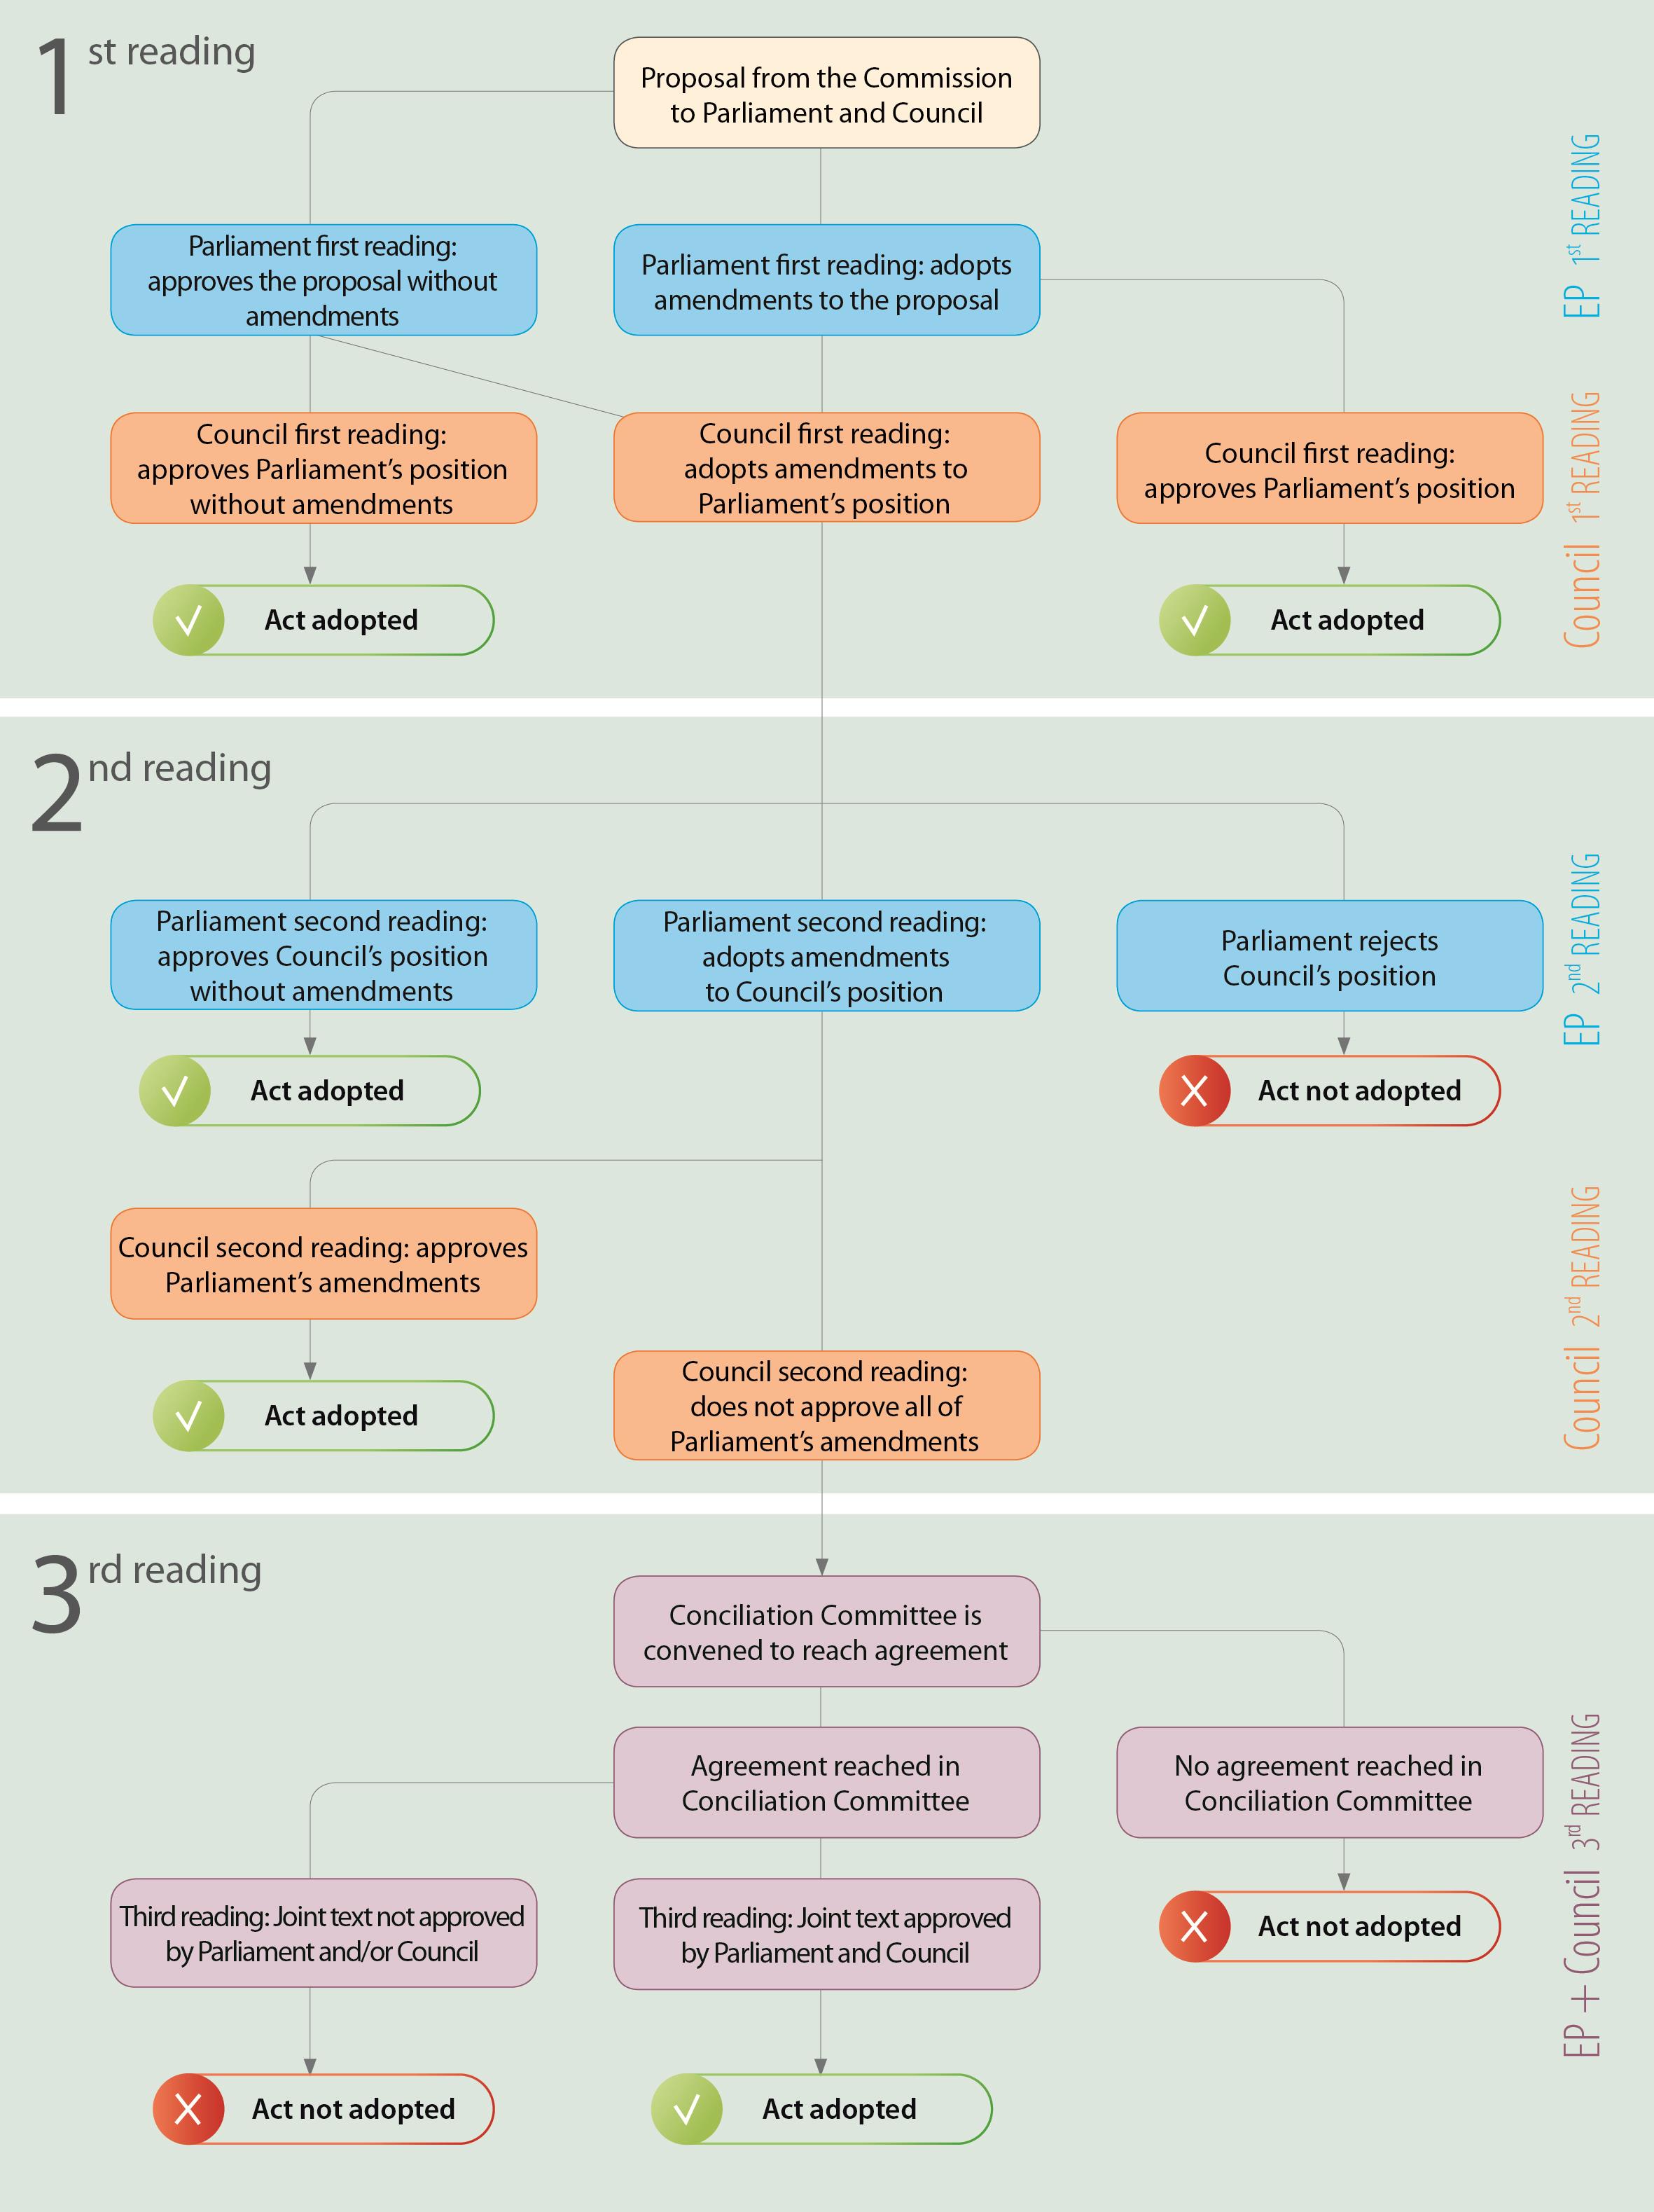 Formal Amendment Process Chart